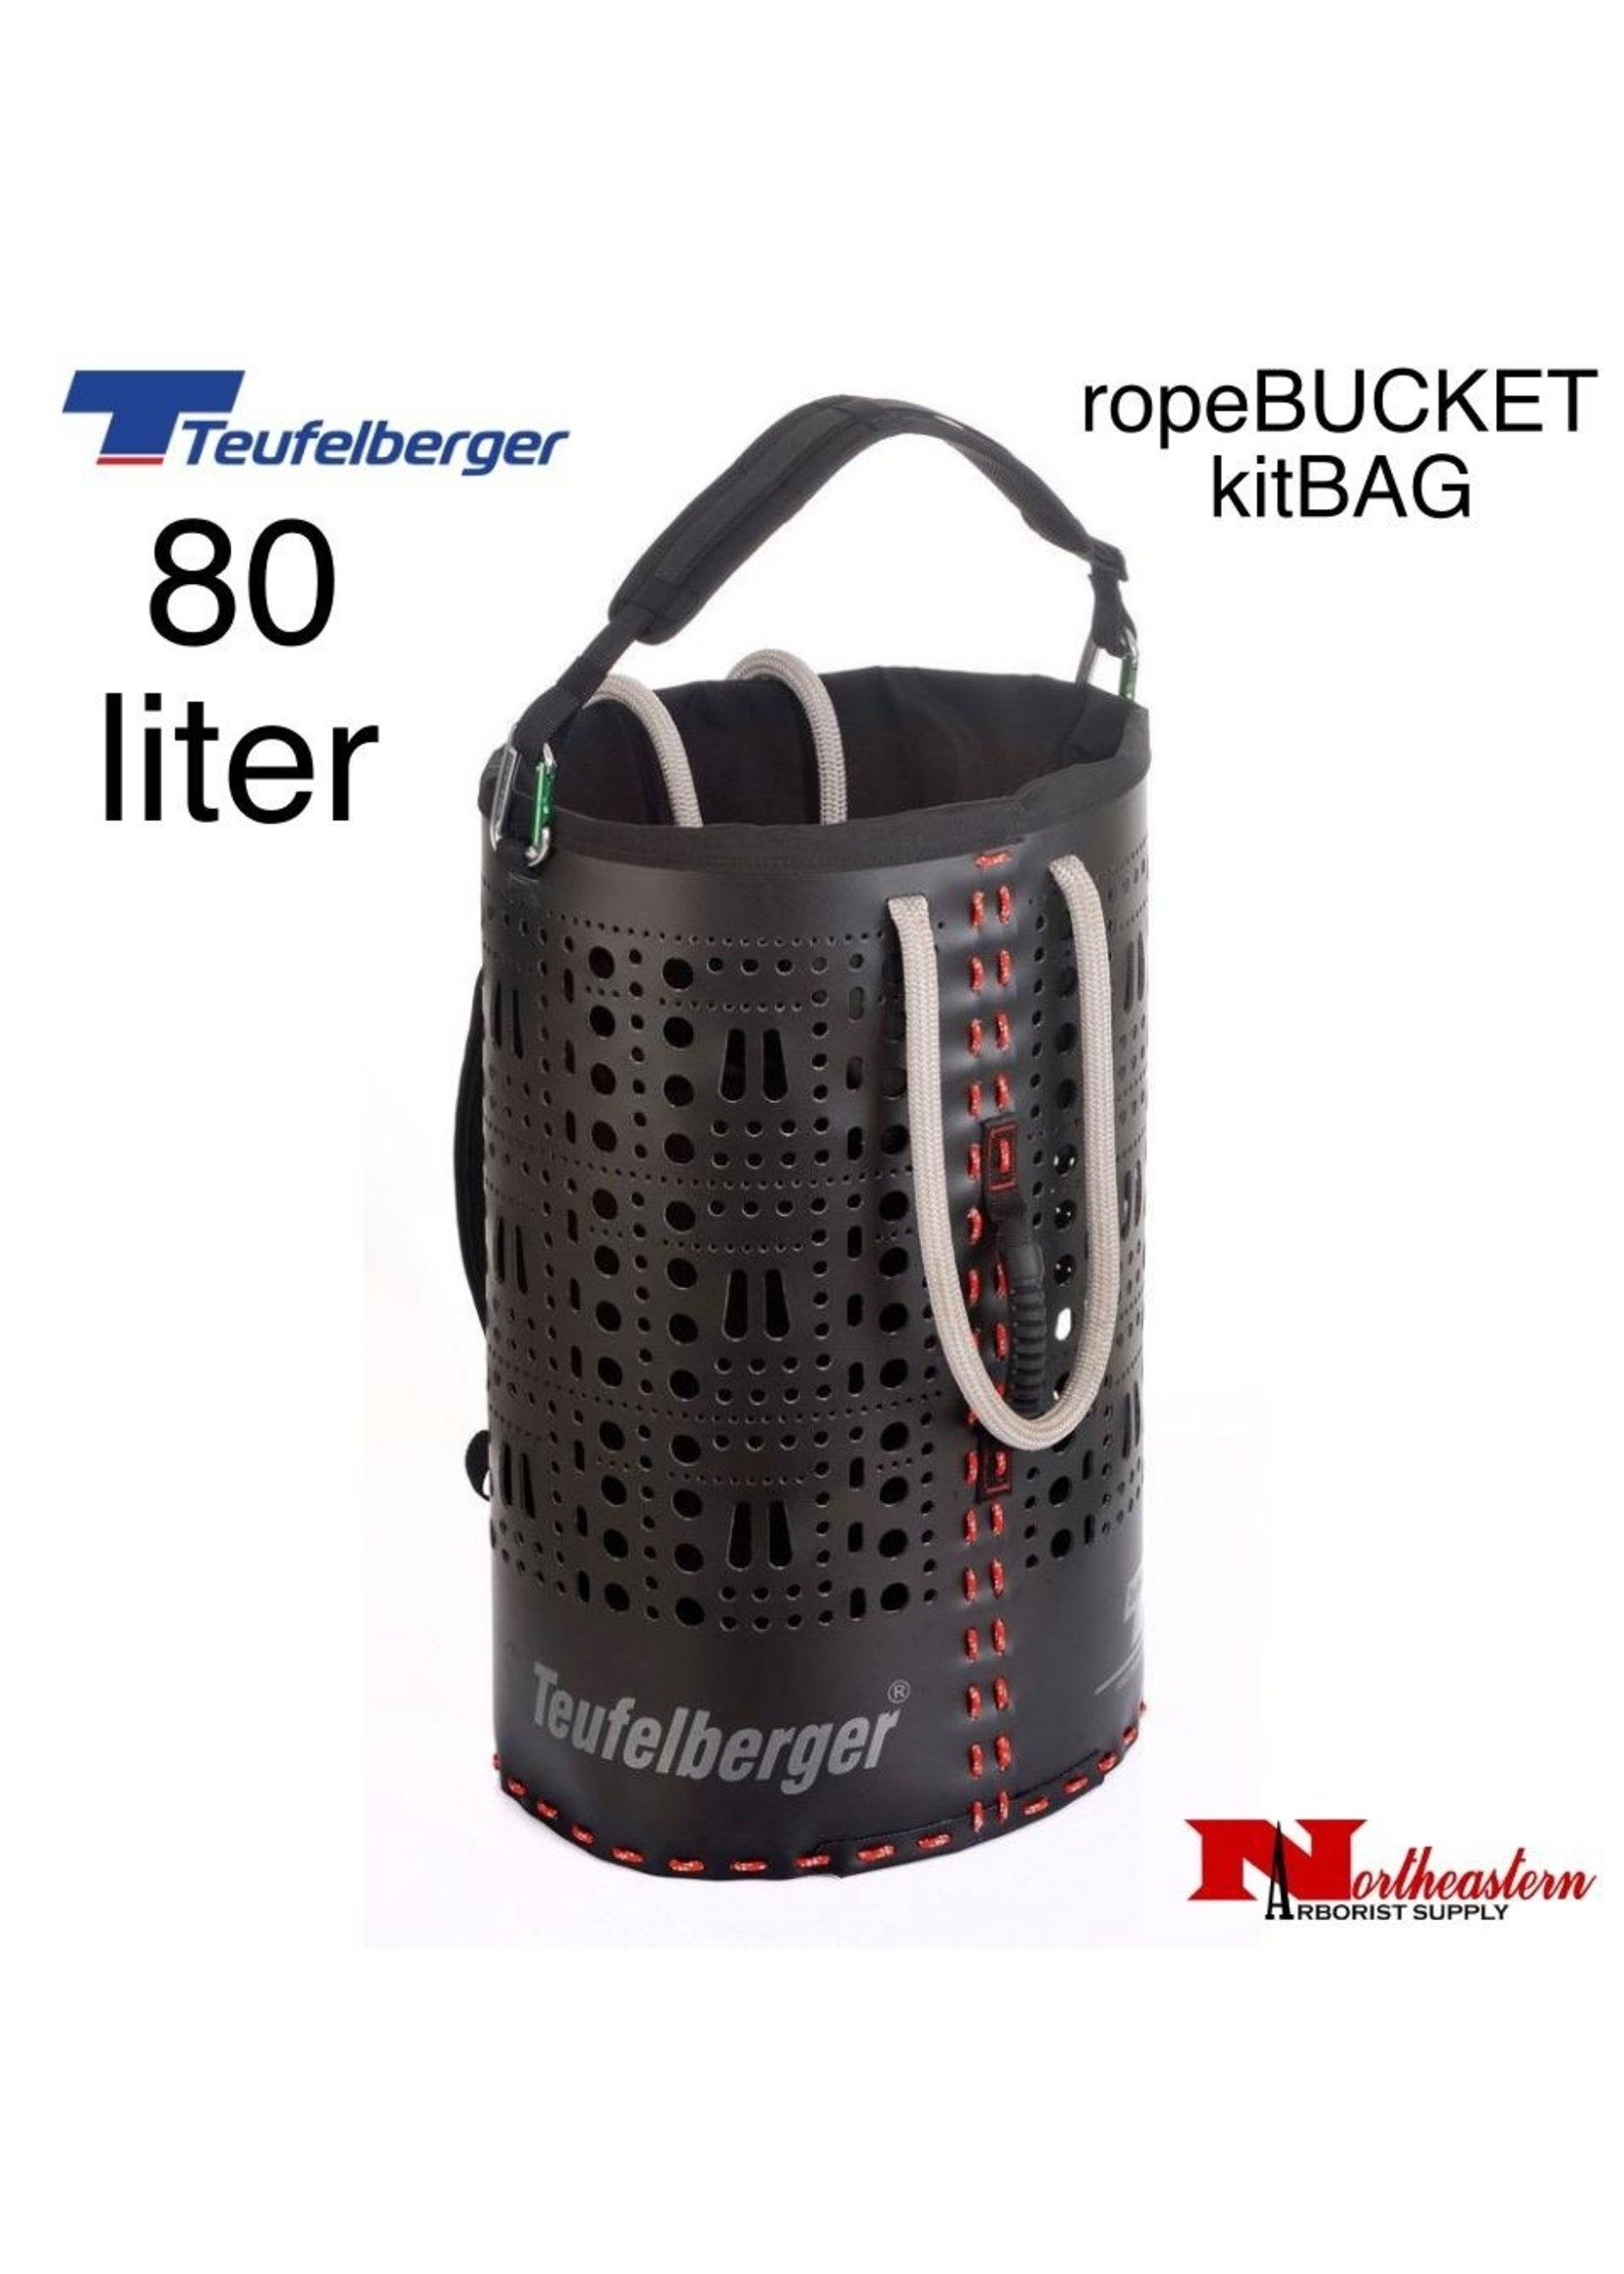 Teufelberger Ropebucket 80 Liter, Biggest Of The Bags, Having A Storage Volume of 80 Liters